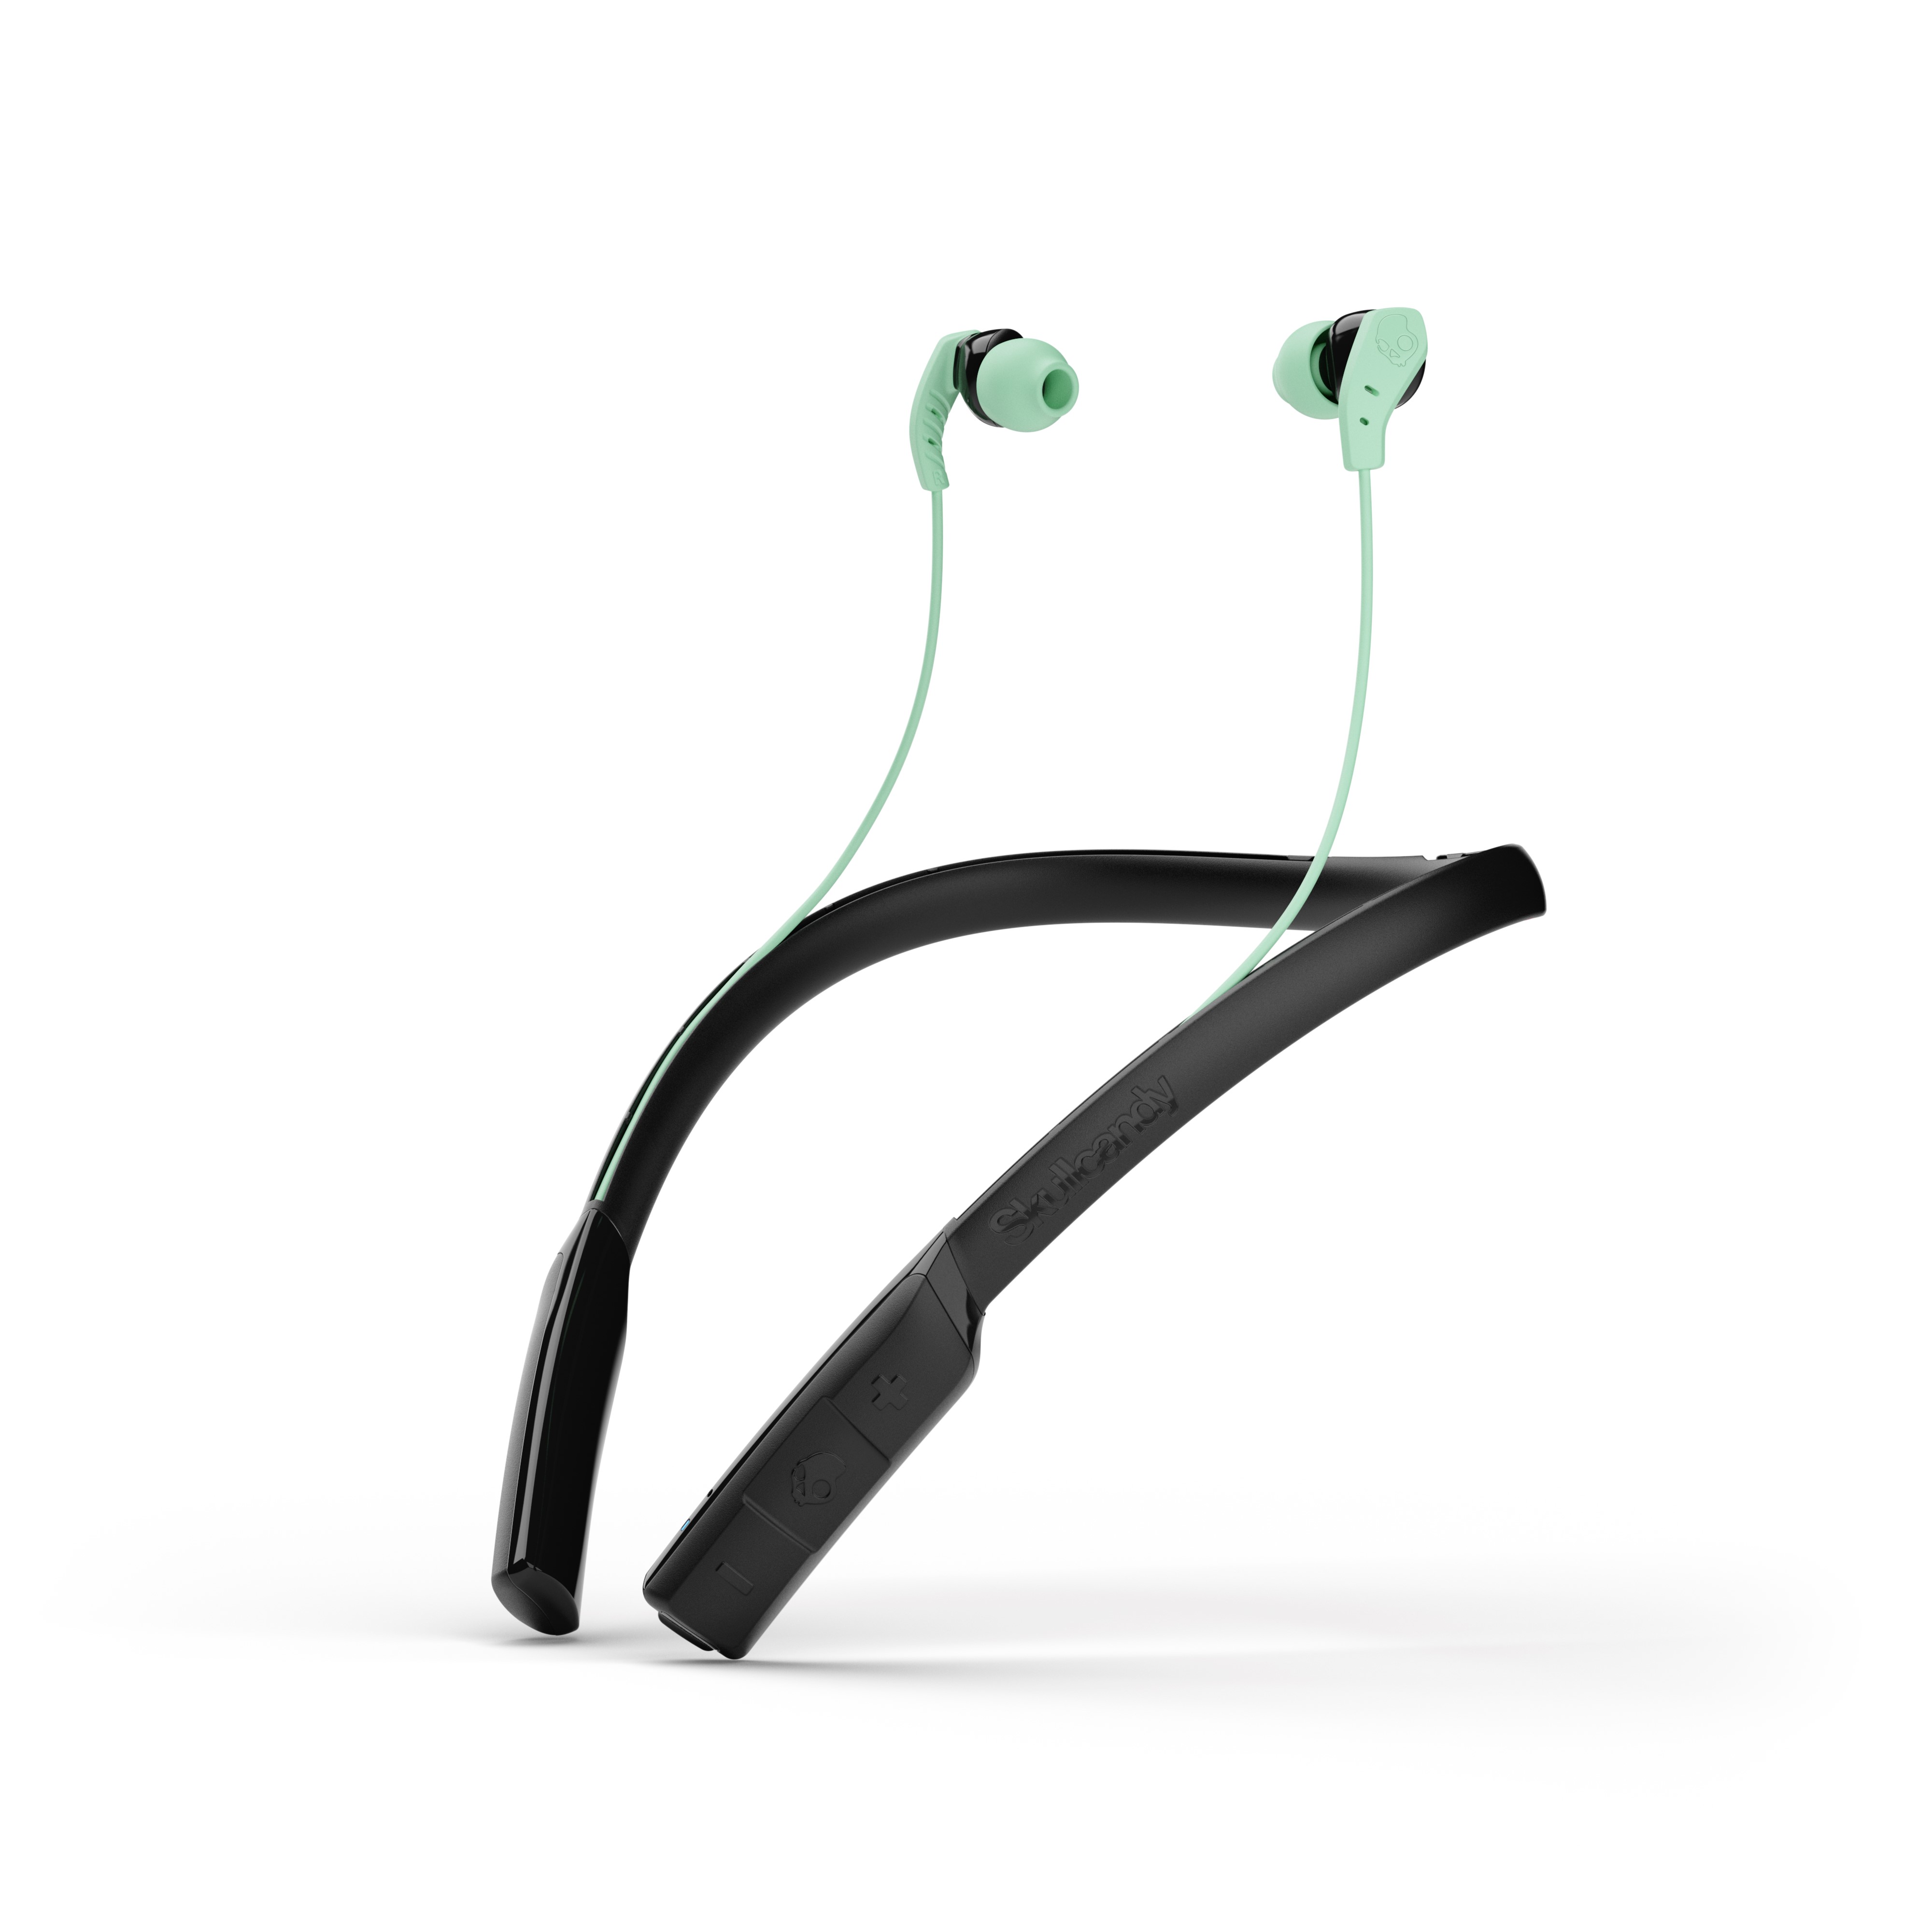 Skullcandy Method Wireless Sport Earbuds in Black & Mint - image 1 of 2